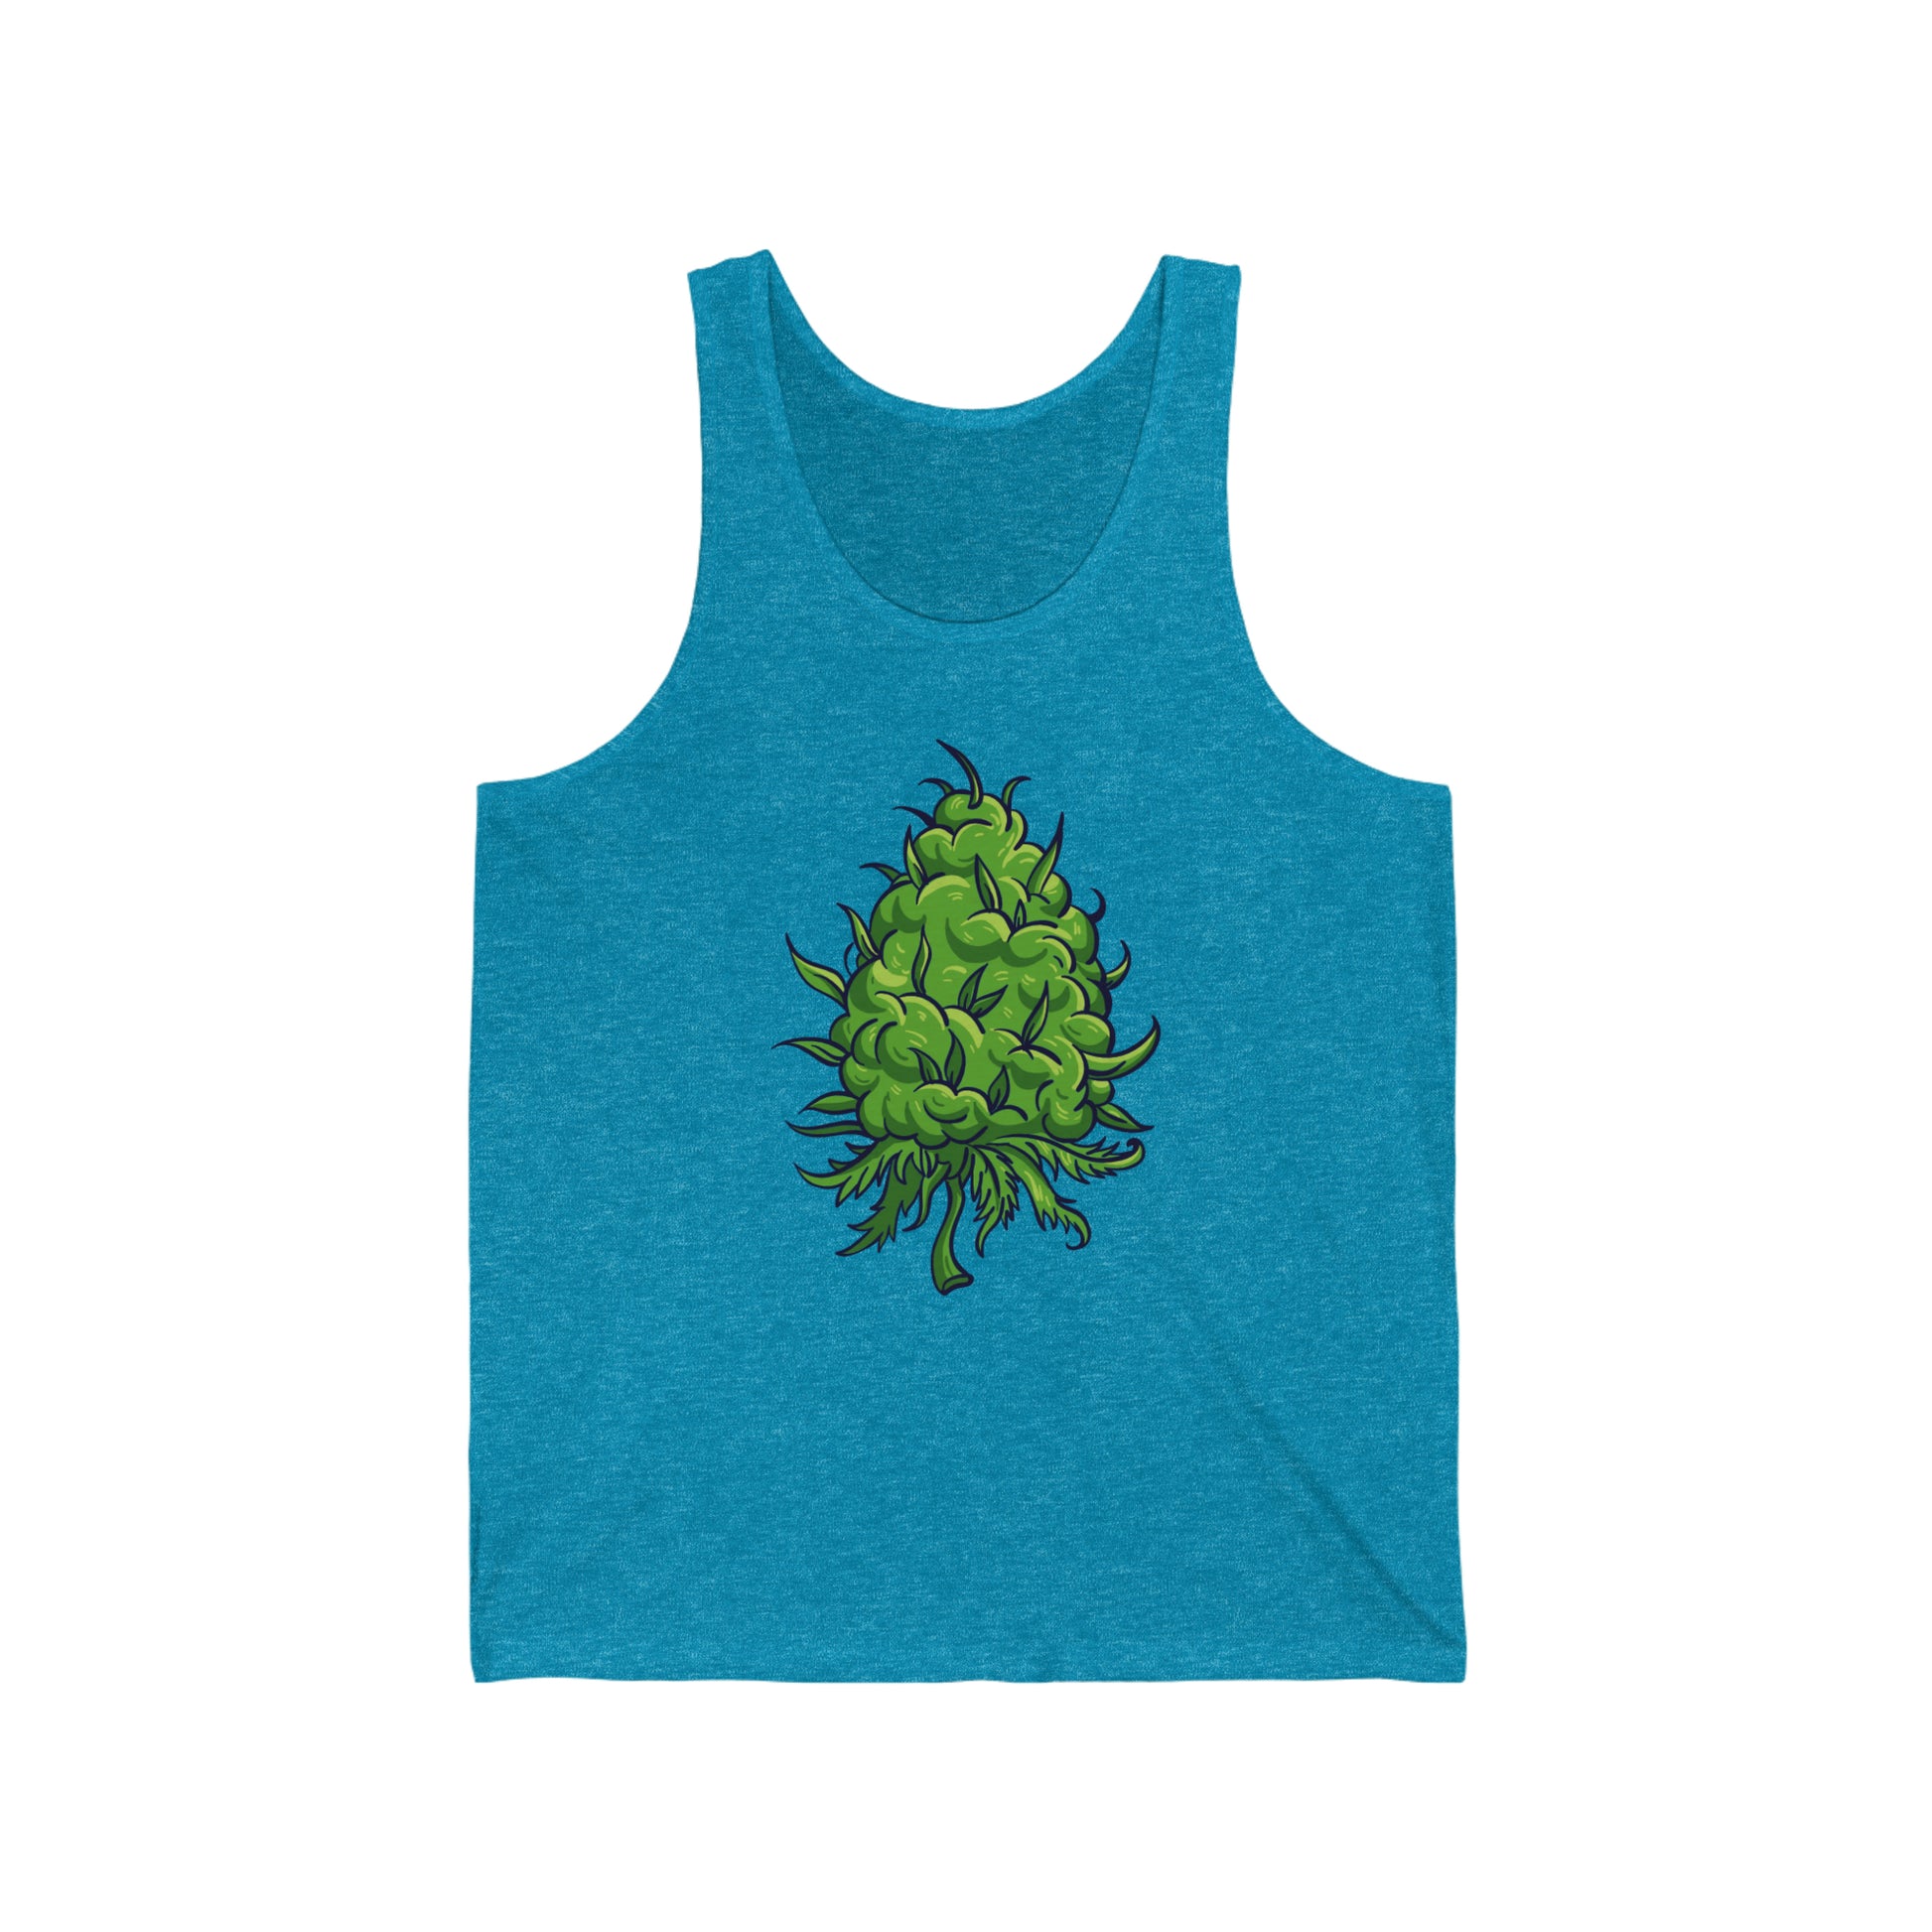 an aqua blue Big Marijuana nug Jersey Tank top with a green weed plant on it.